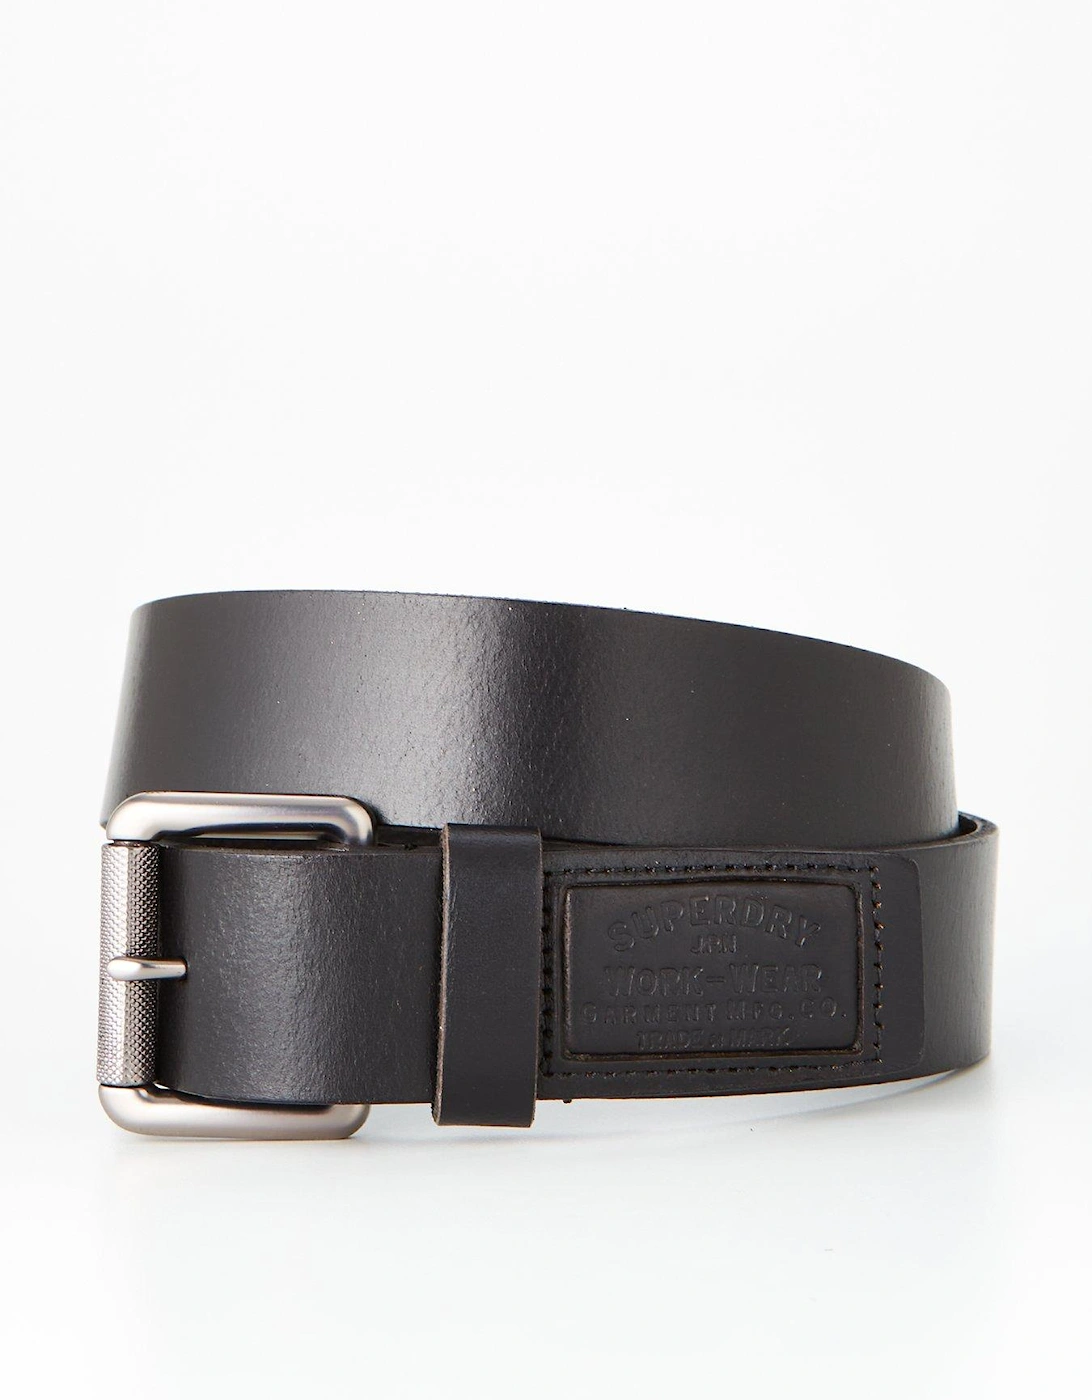 Badgeman Leather Belt - Black, 4 of 3